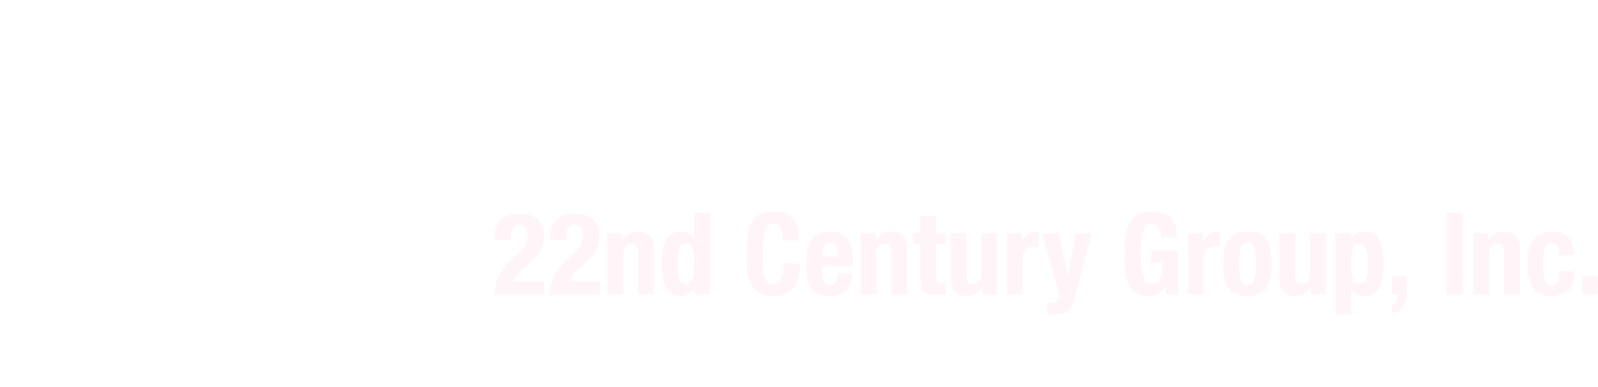 22nd Century Group
 logo large for dark backgrounds (transparent PNG)